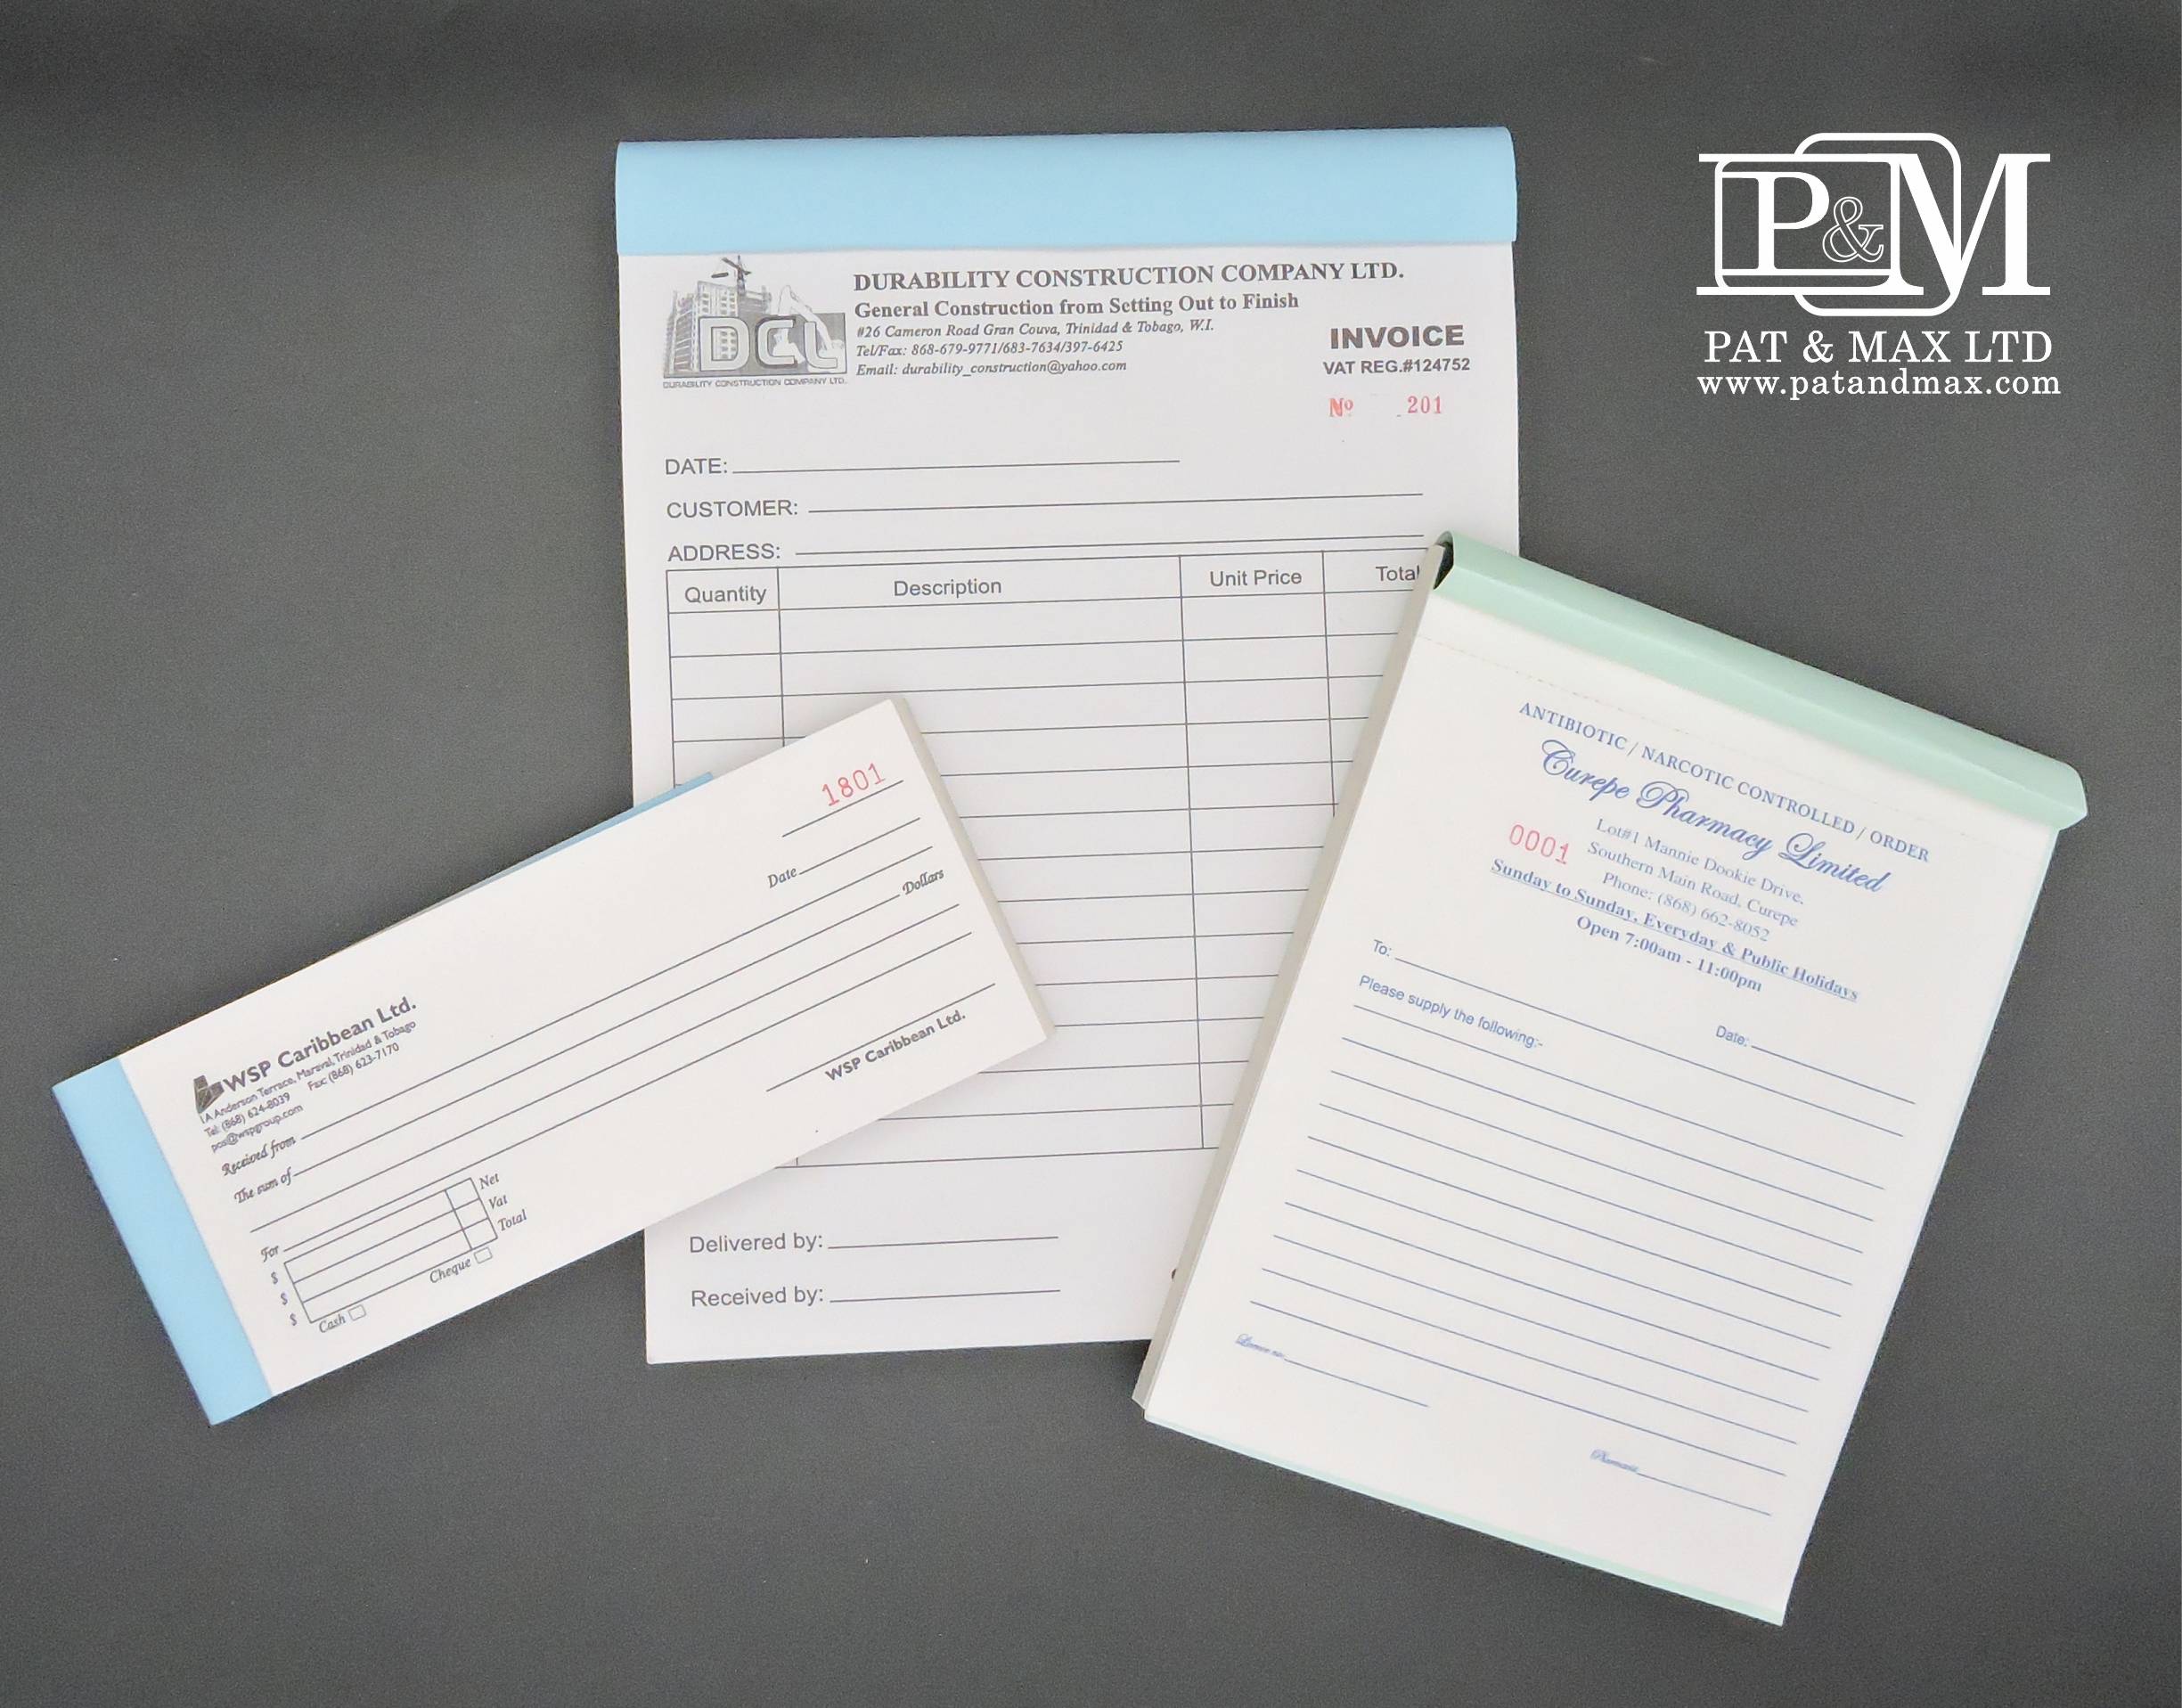 Pat & Max Ltd Plastic & ID Card Systems - ADVERTISING SPECIALTIES